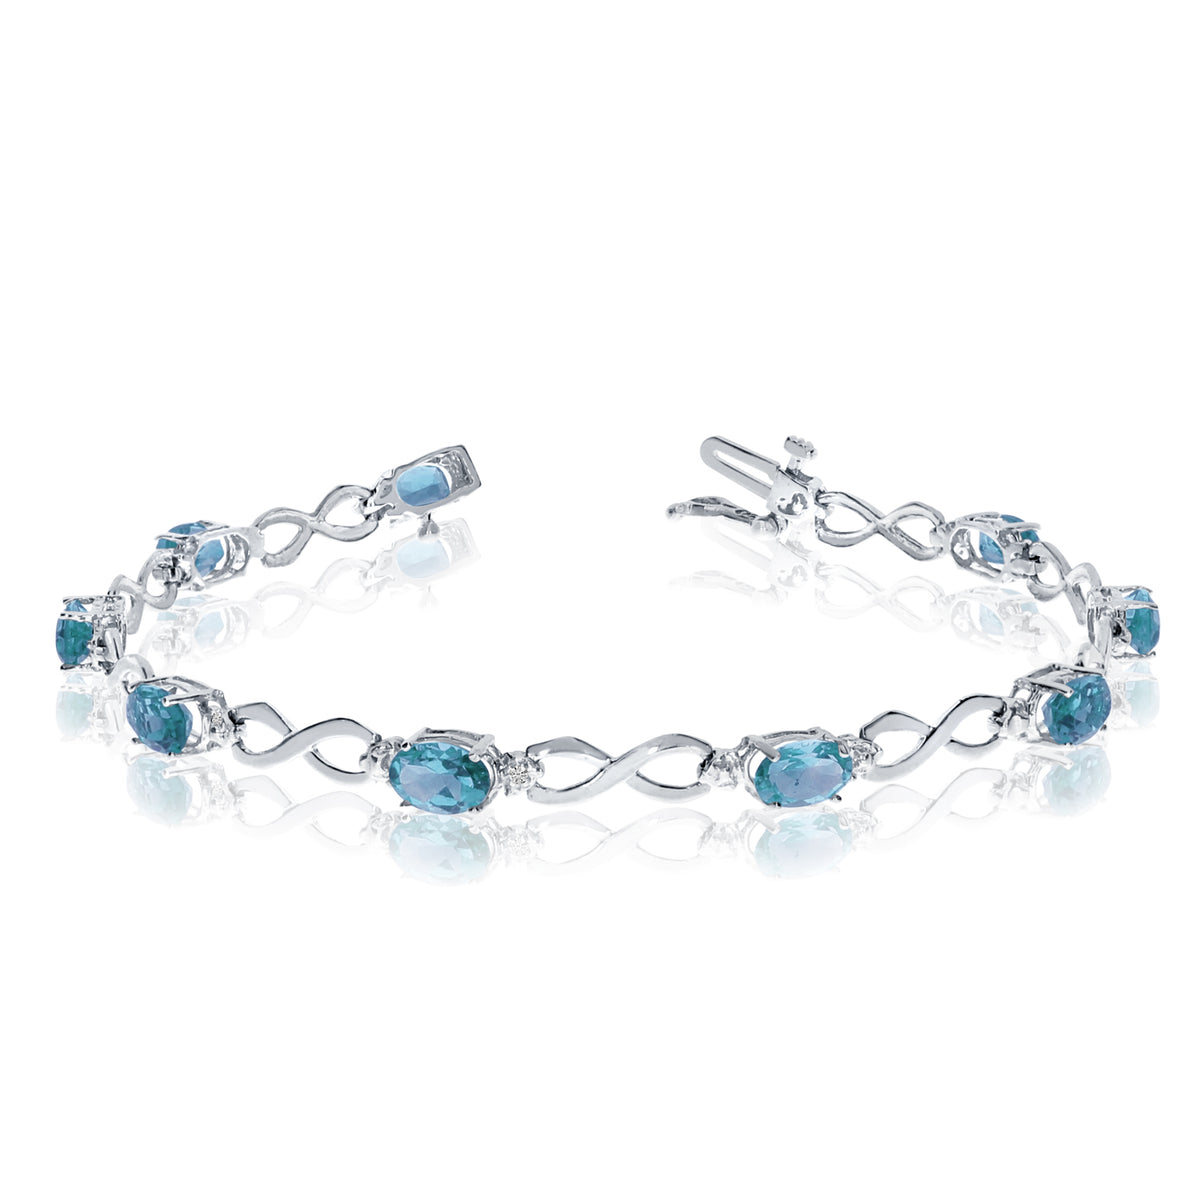 14K White Gold Oval Blue Topaz Stones And Diamonds Infinity Tennis Bracelet, 7" fine designer jewelry for men and women